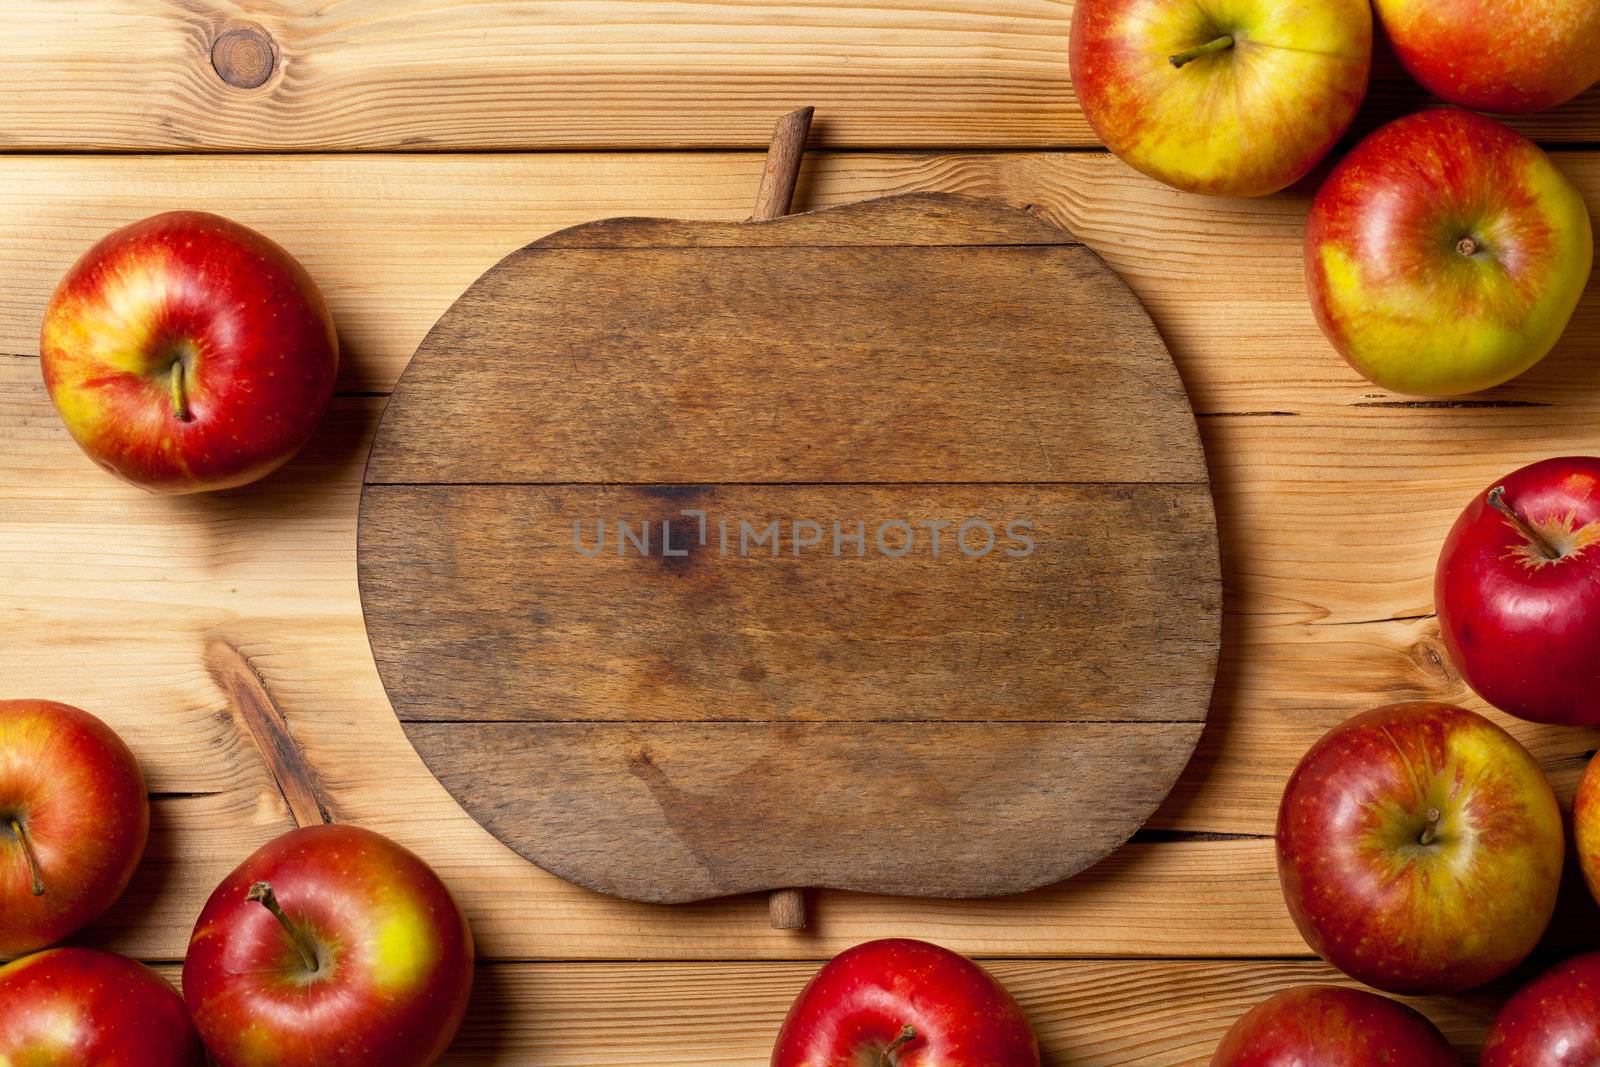 Apples by bozena_fulawka